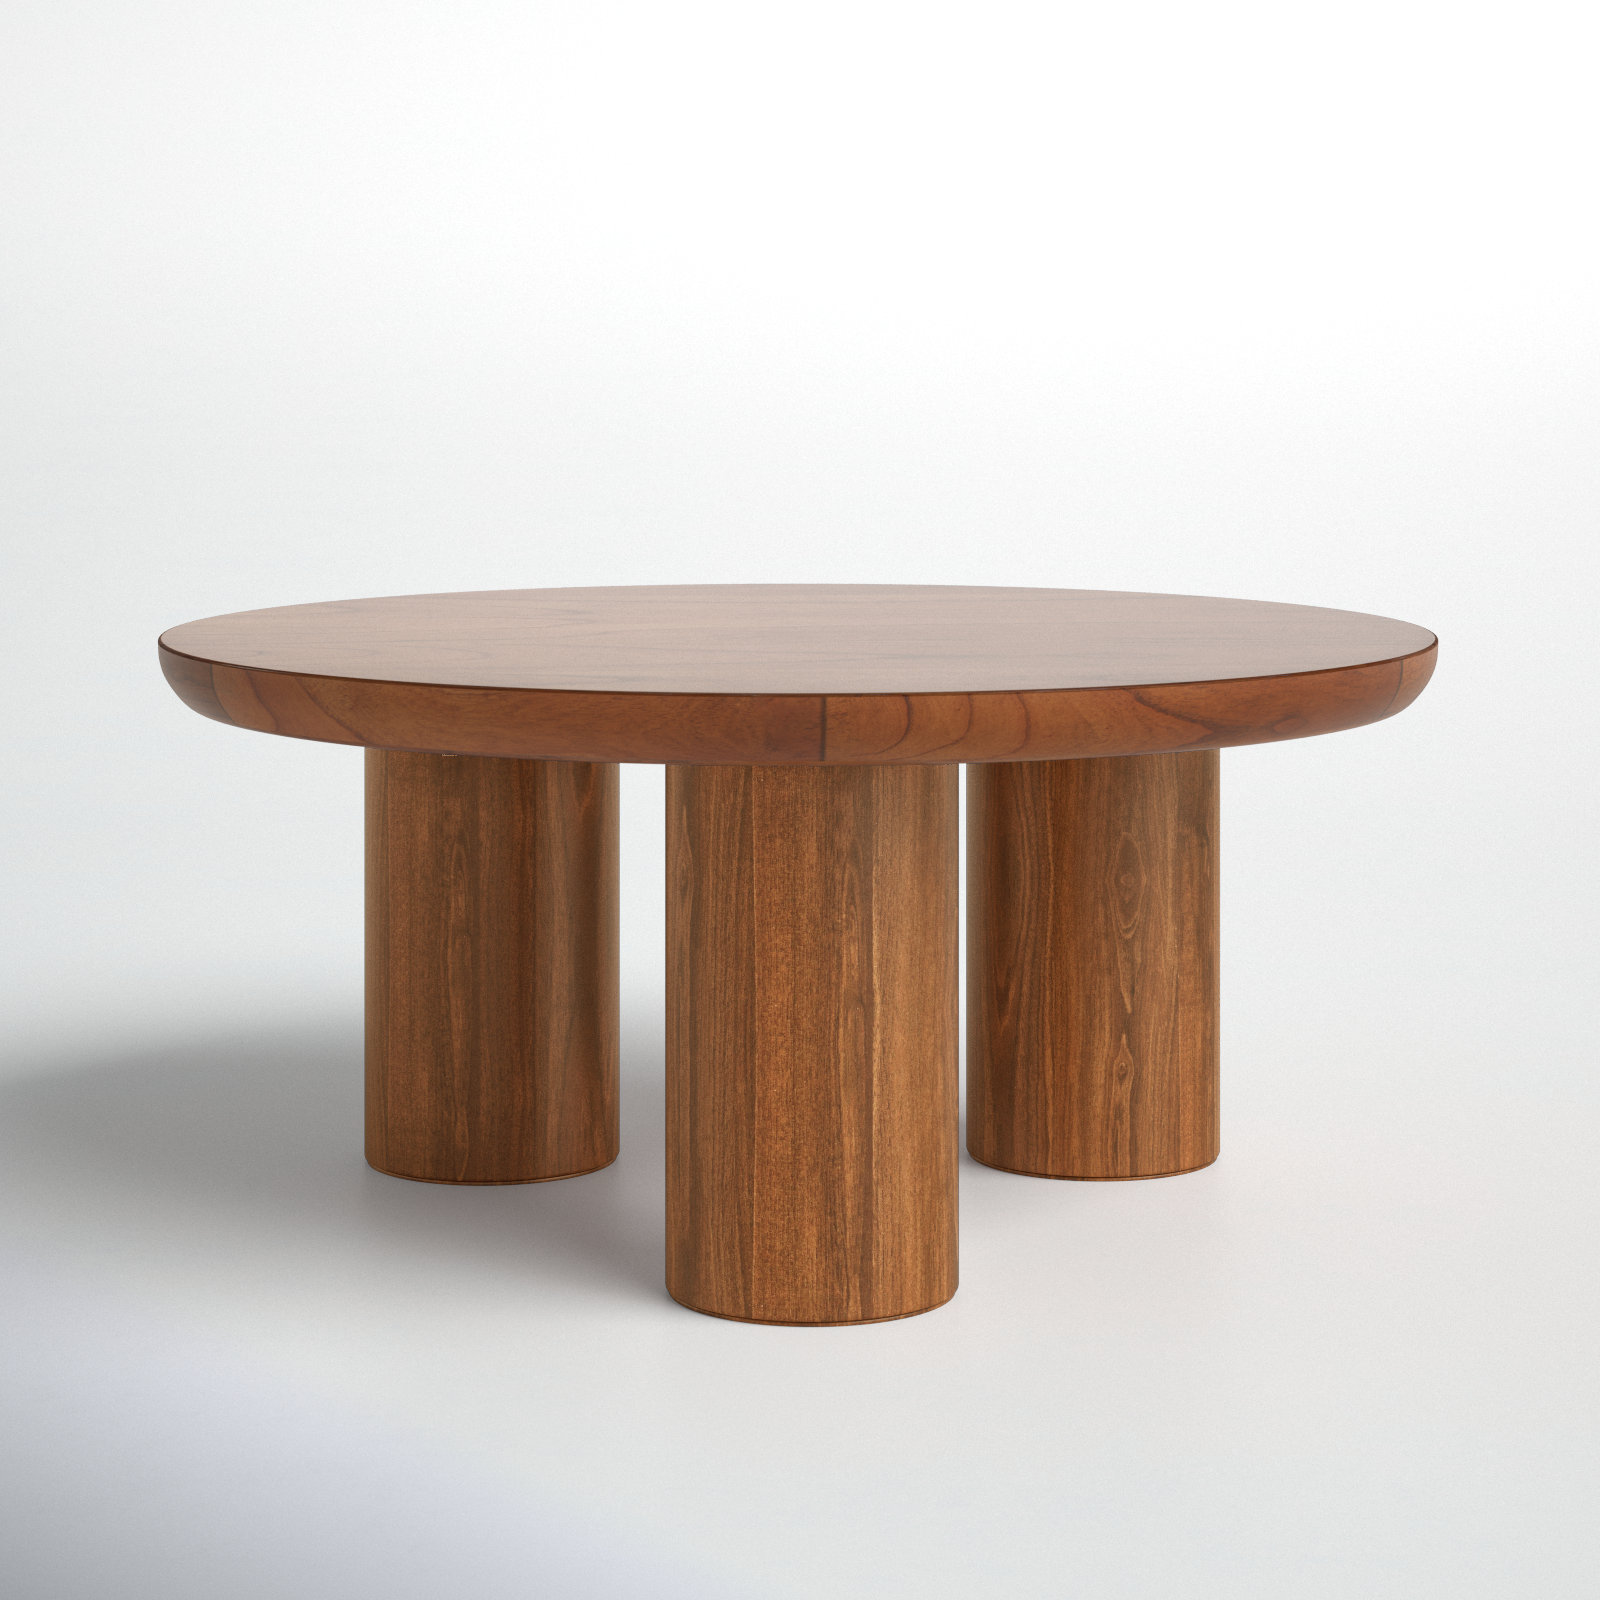 Alastor Modern Oval White Concrete Coffee Table + Reviews